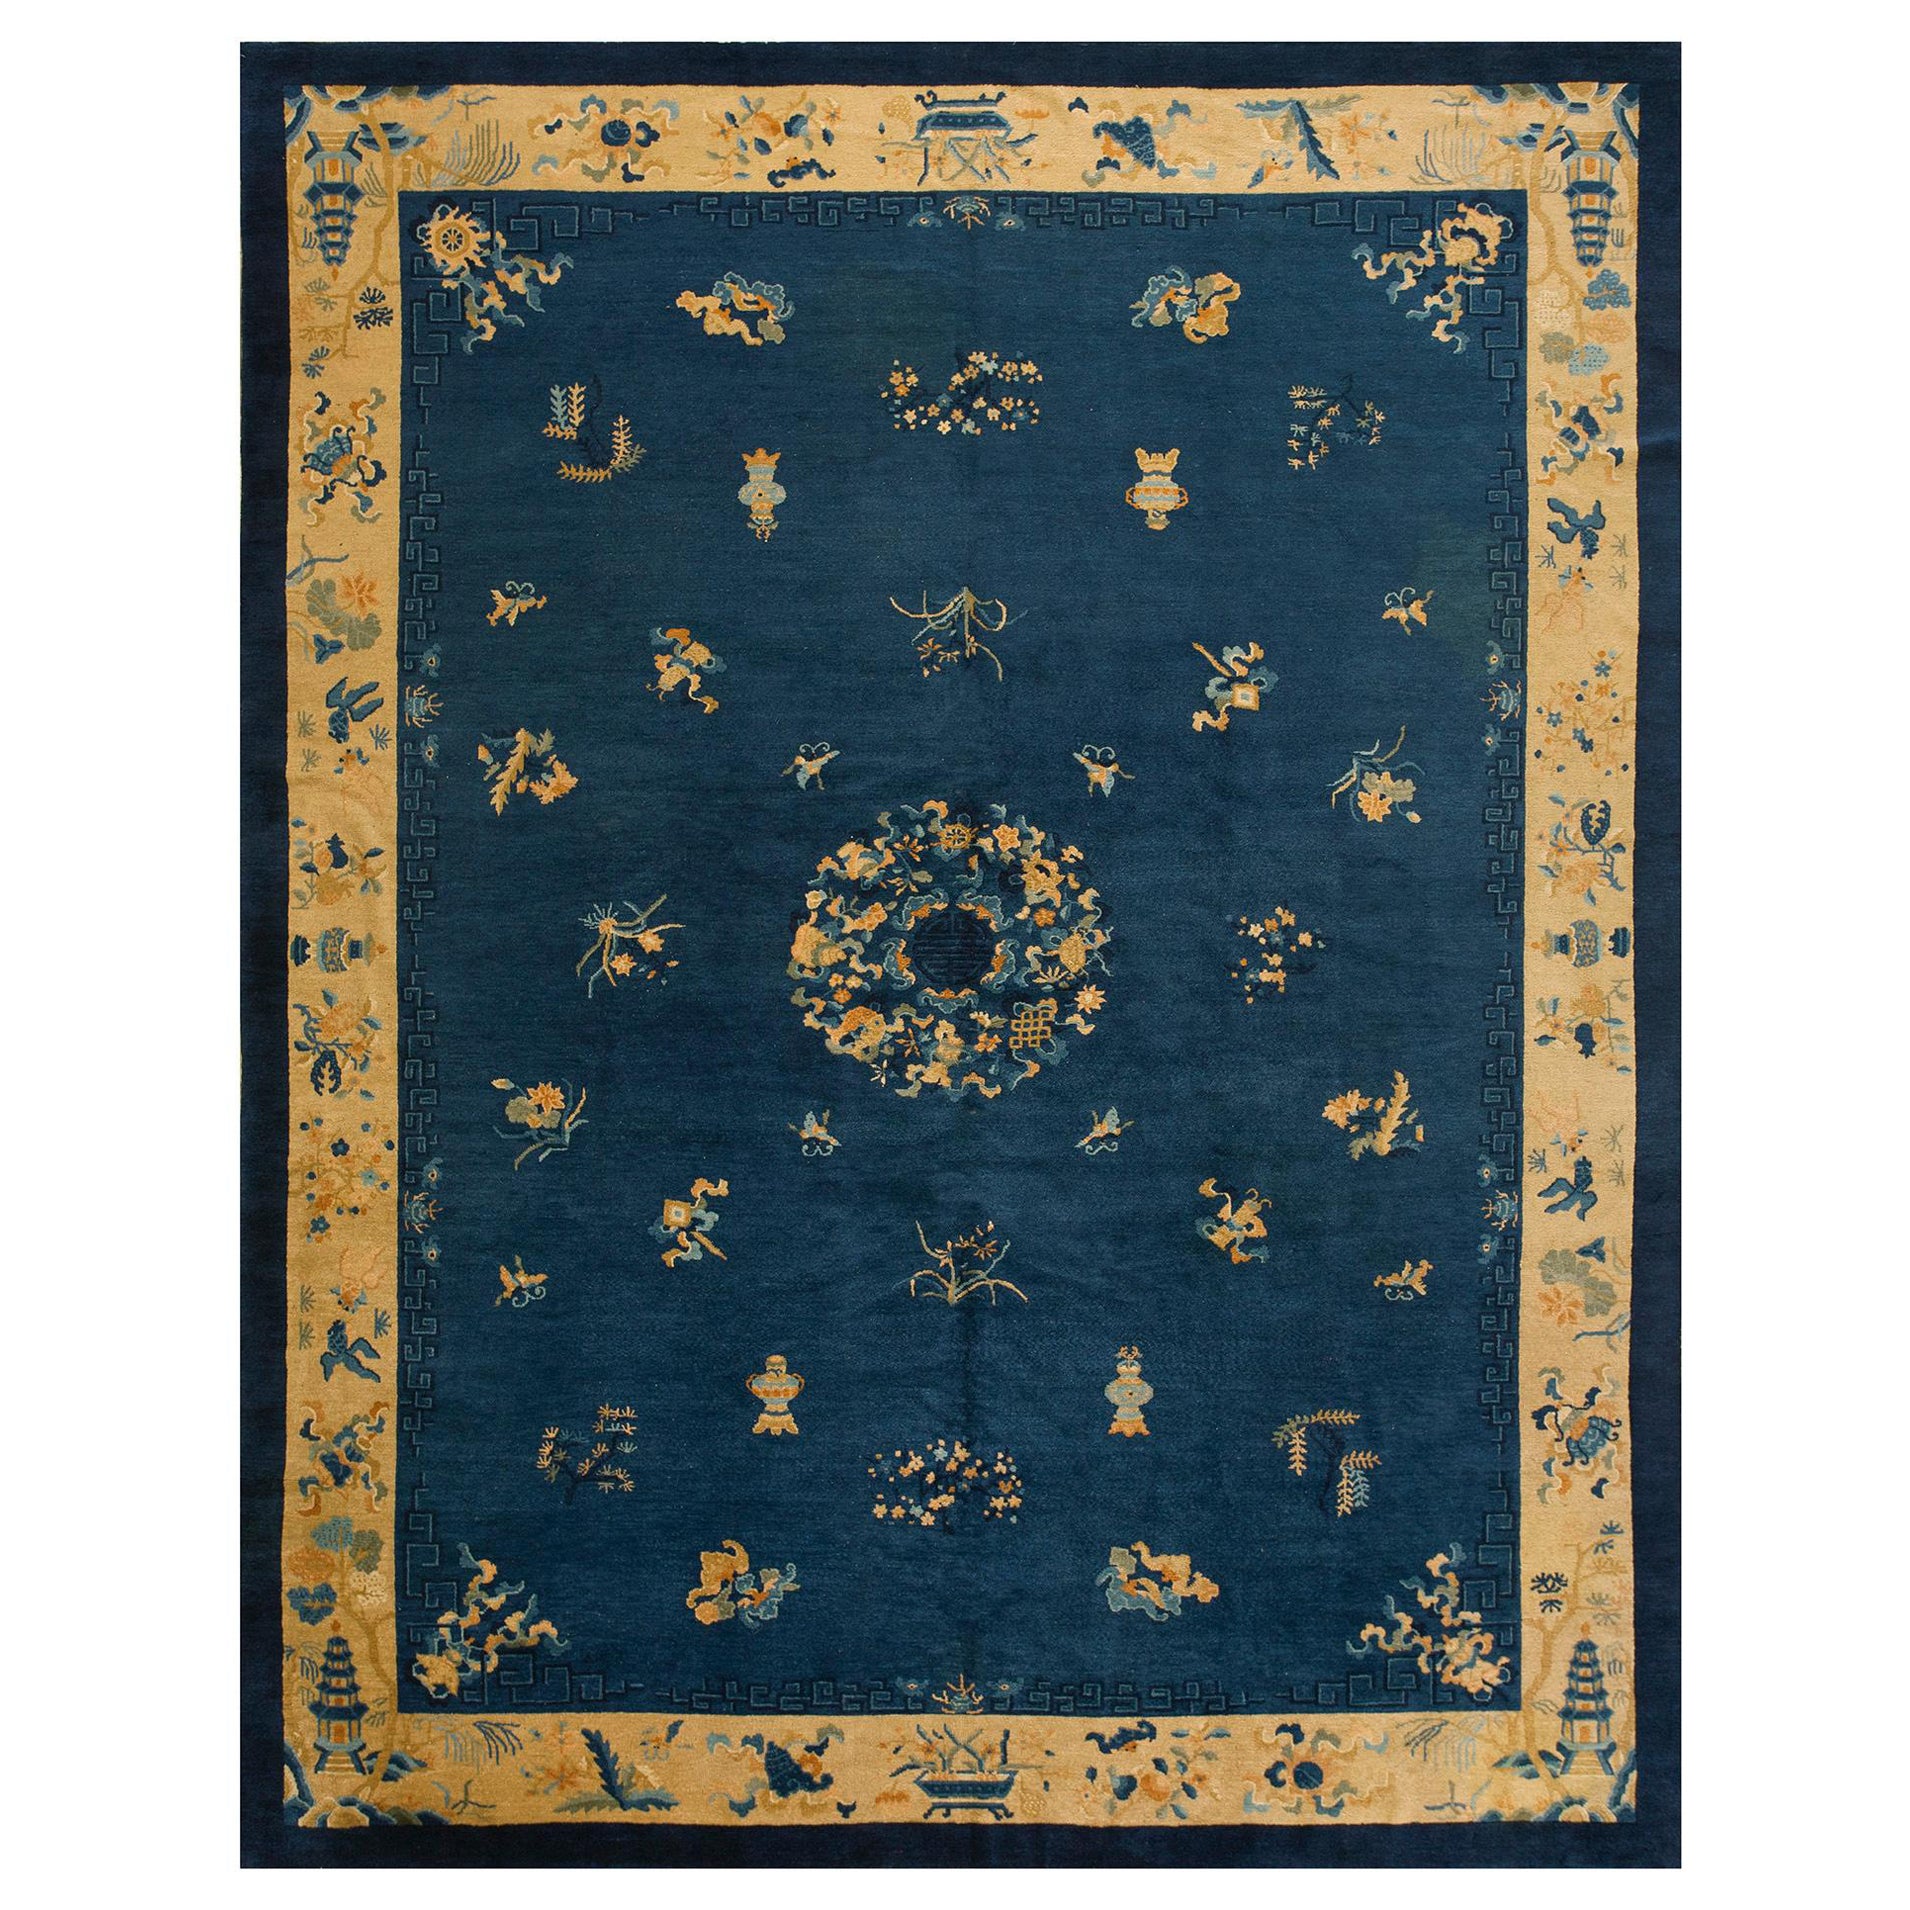 Early 20th Century Chinese Peking Carpet ( 9'1'' x 11'8'' - 277 x 356 )